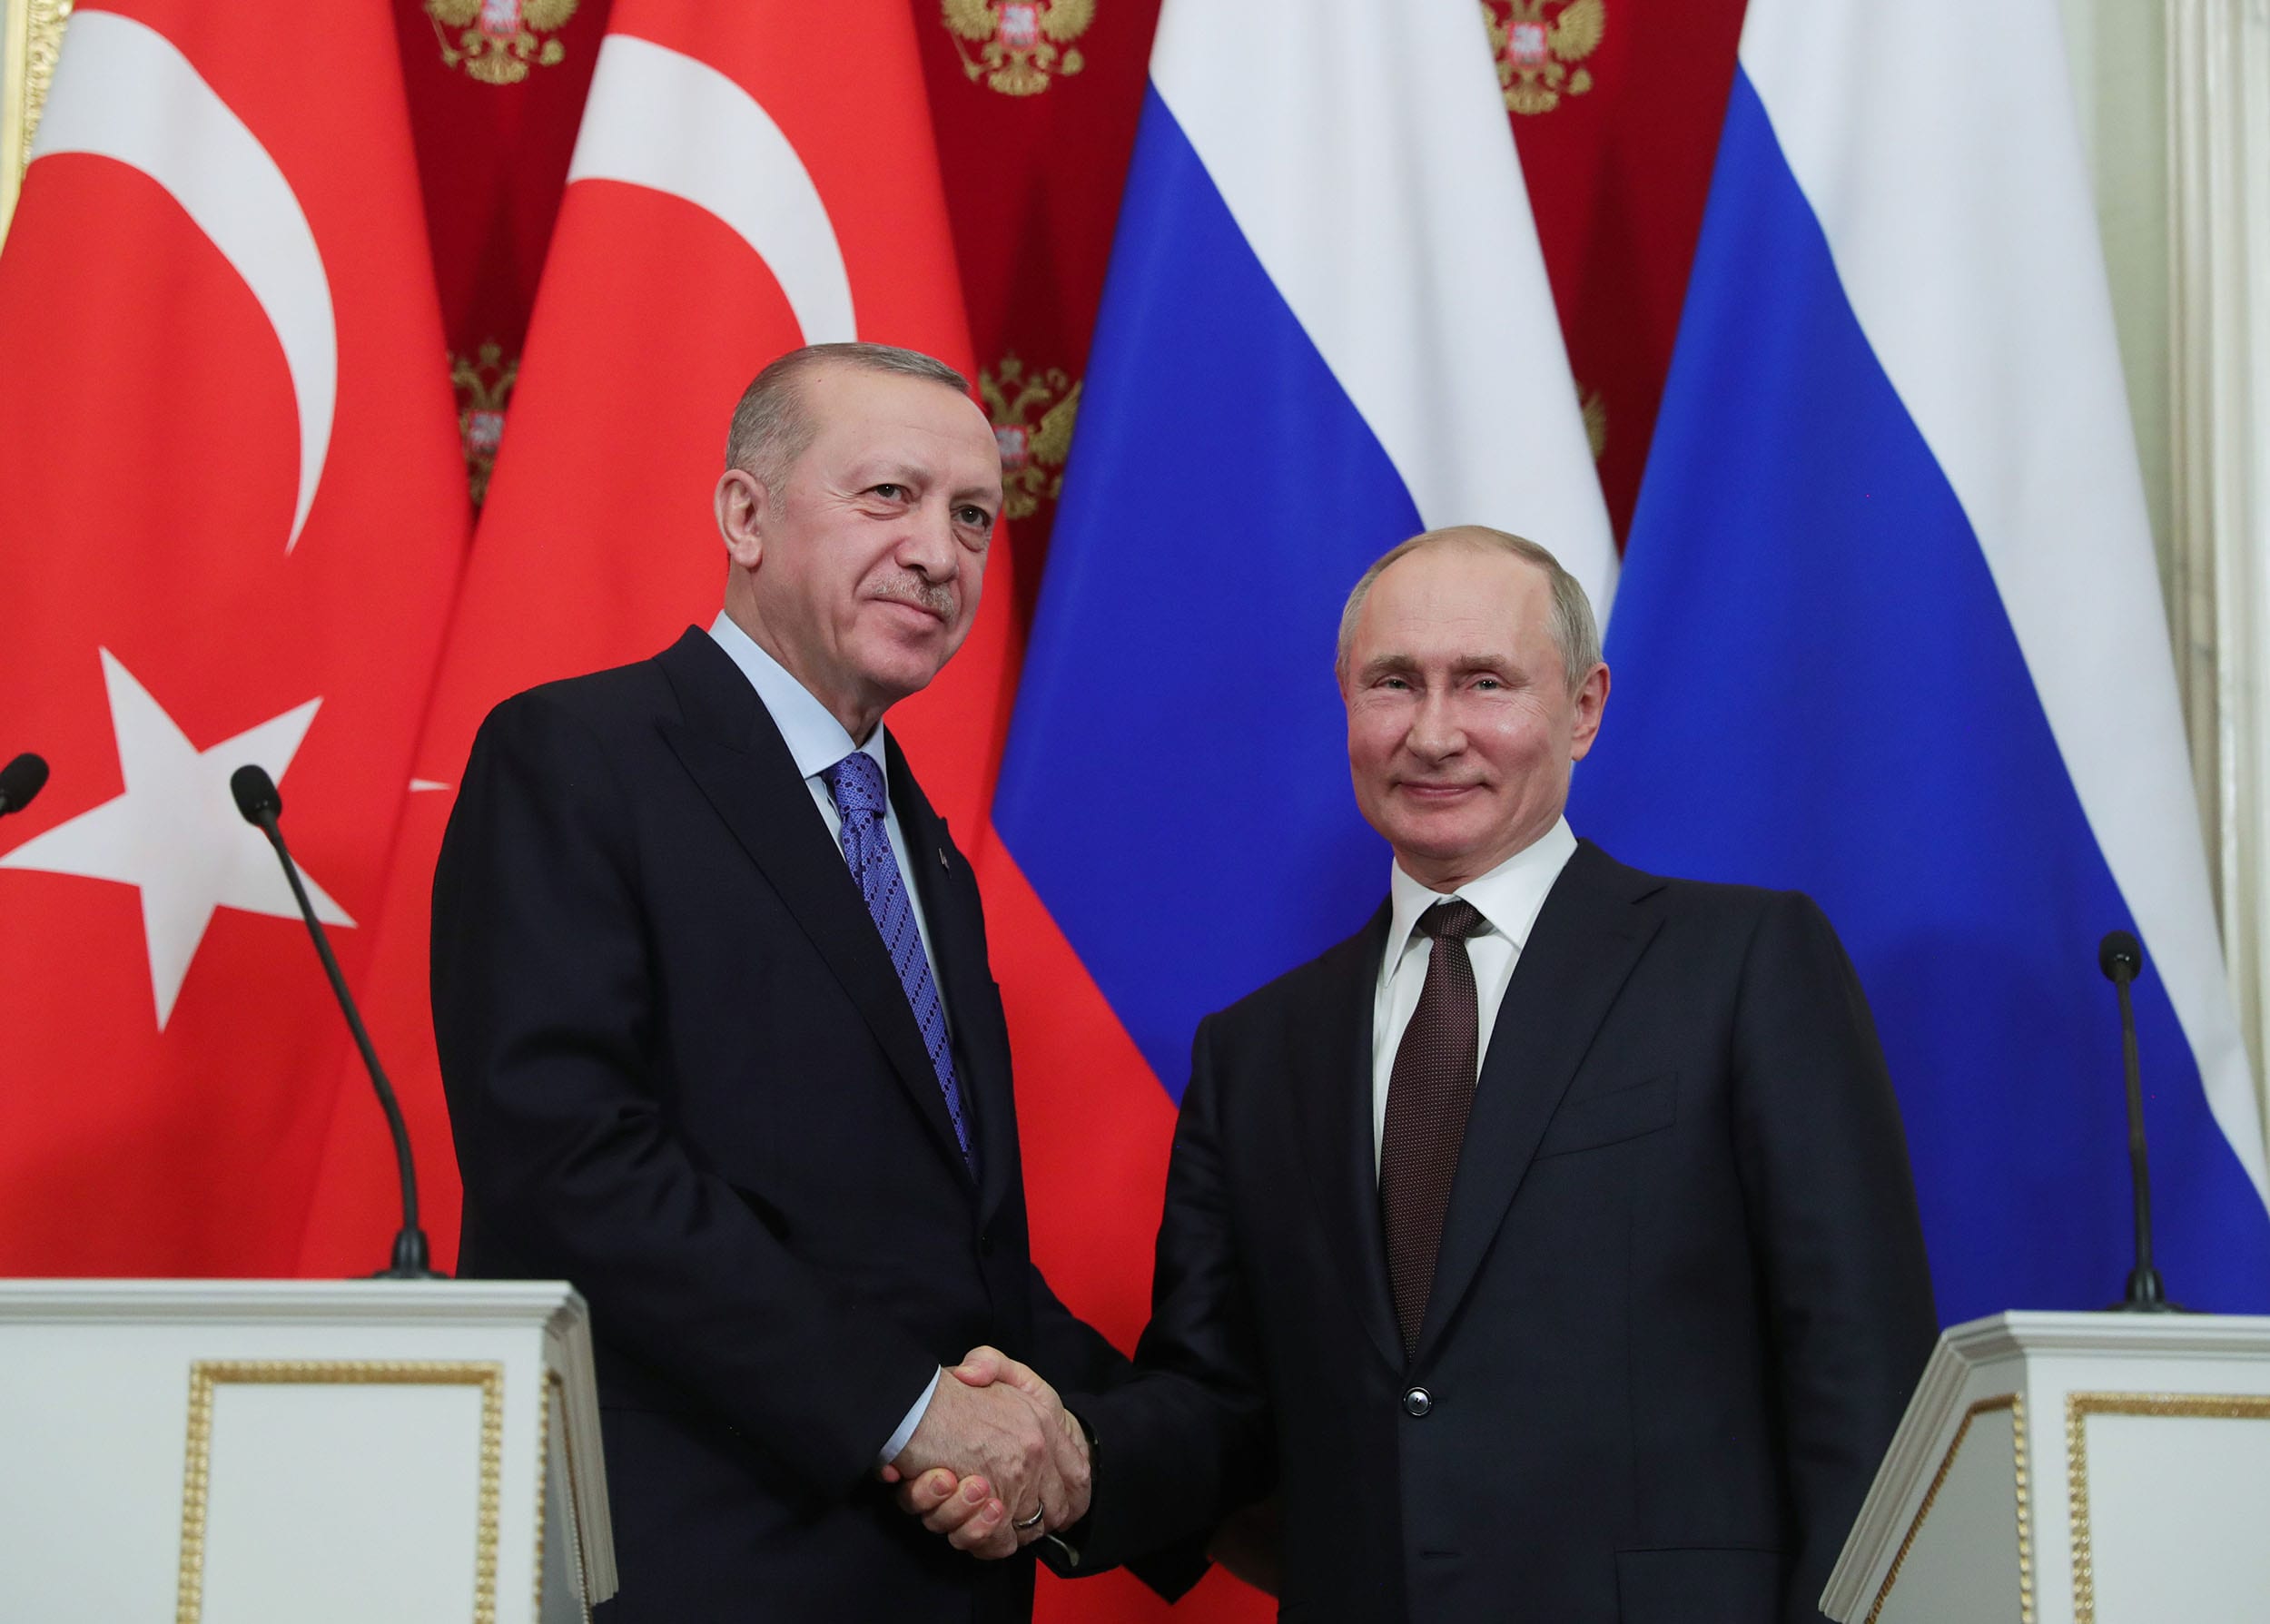 Erdoğan discusses COVID-19 fight, Sputnik V vaccine with Putin